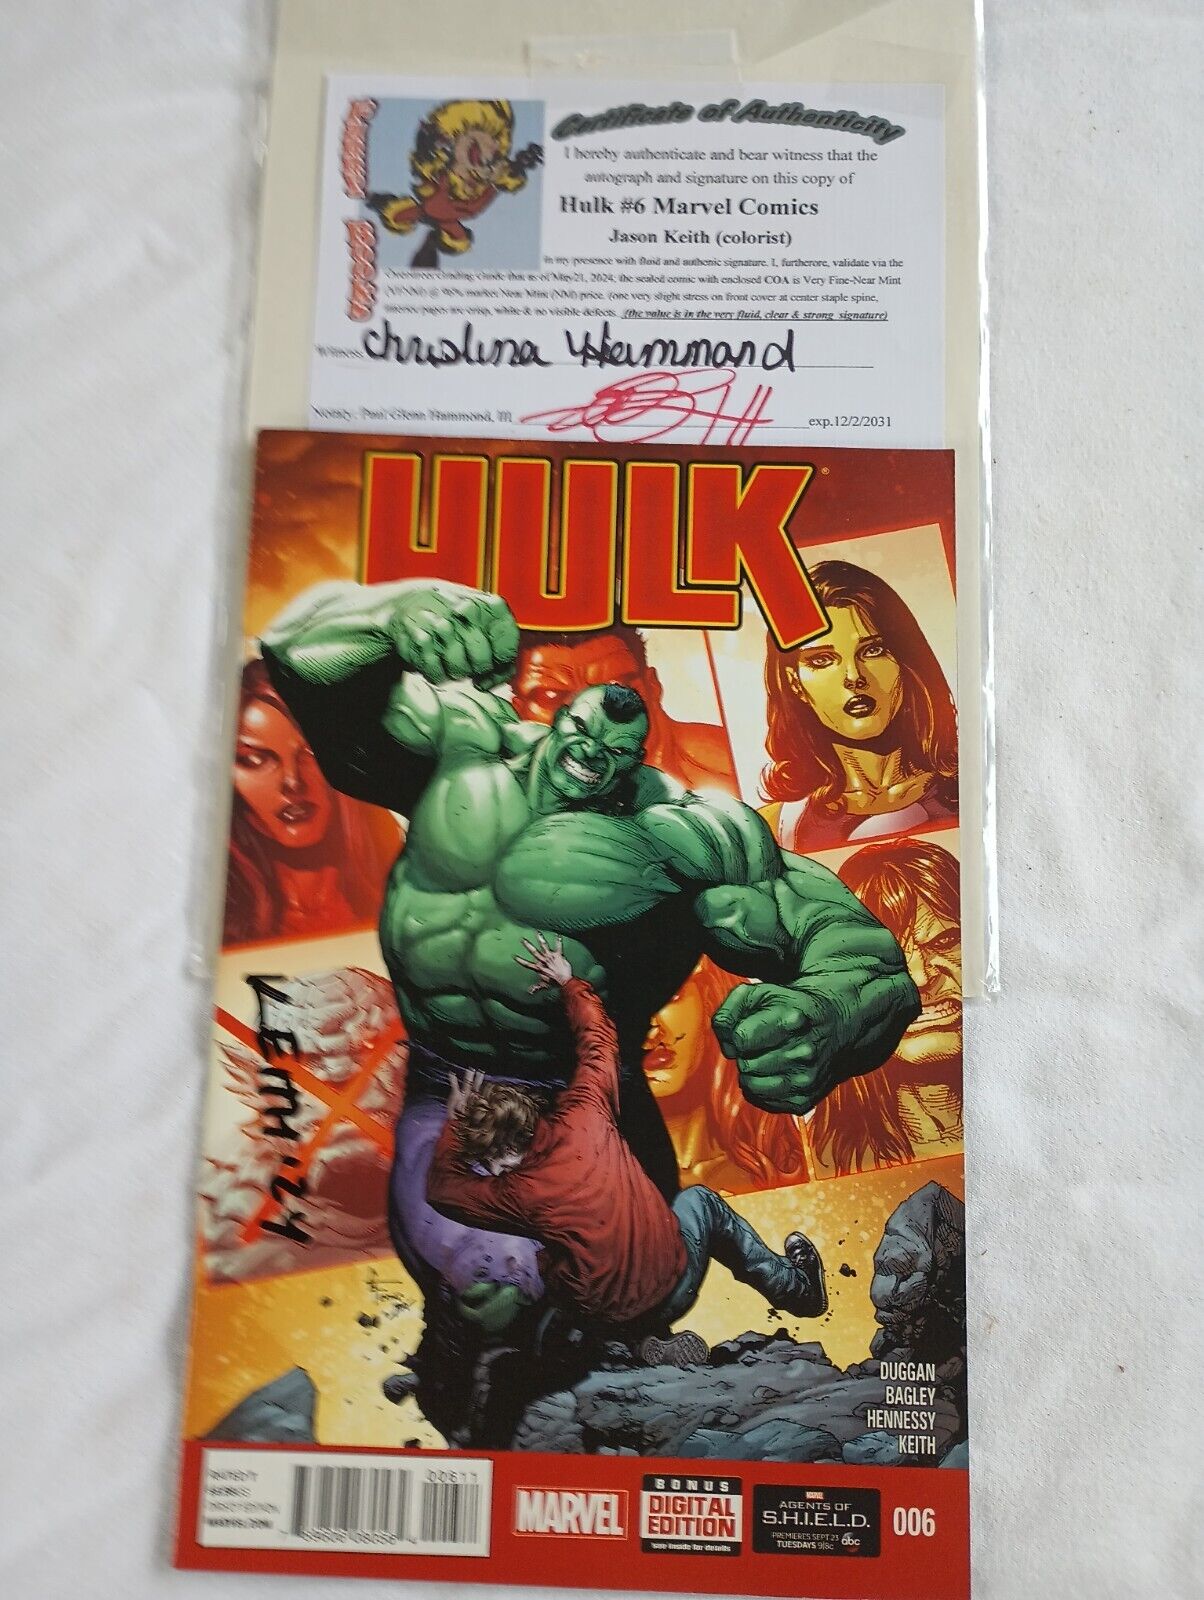 HULK #6 (VFNM) Marvel Comics 2014 signed Jason Keith